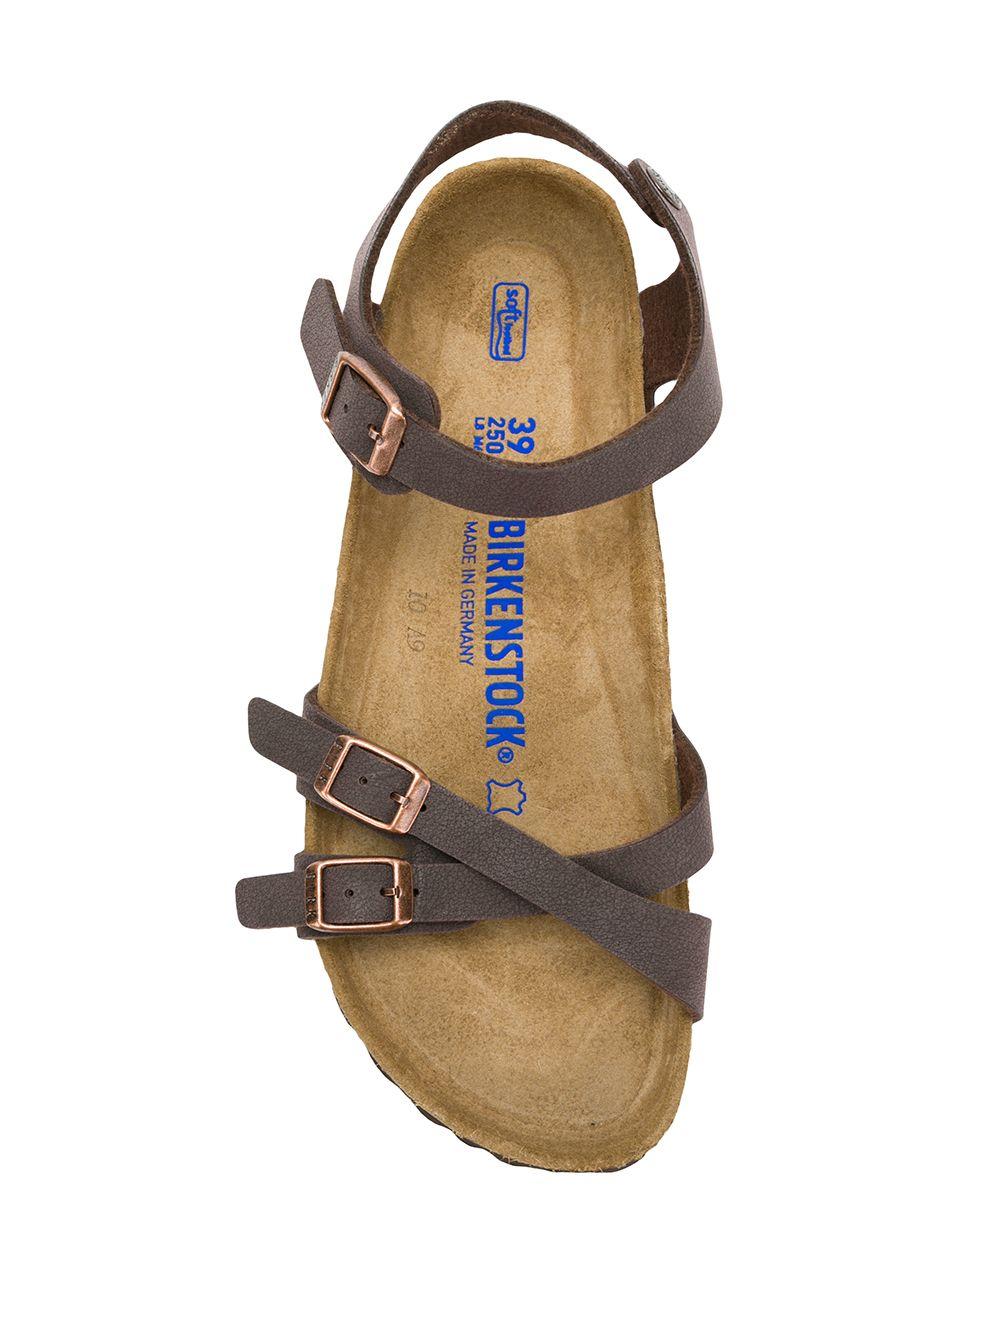 Birkenstock Rio Sandals in Brown | Lyst